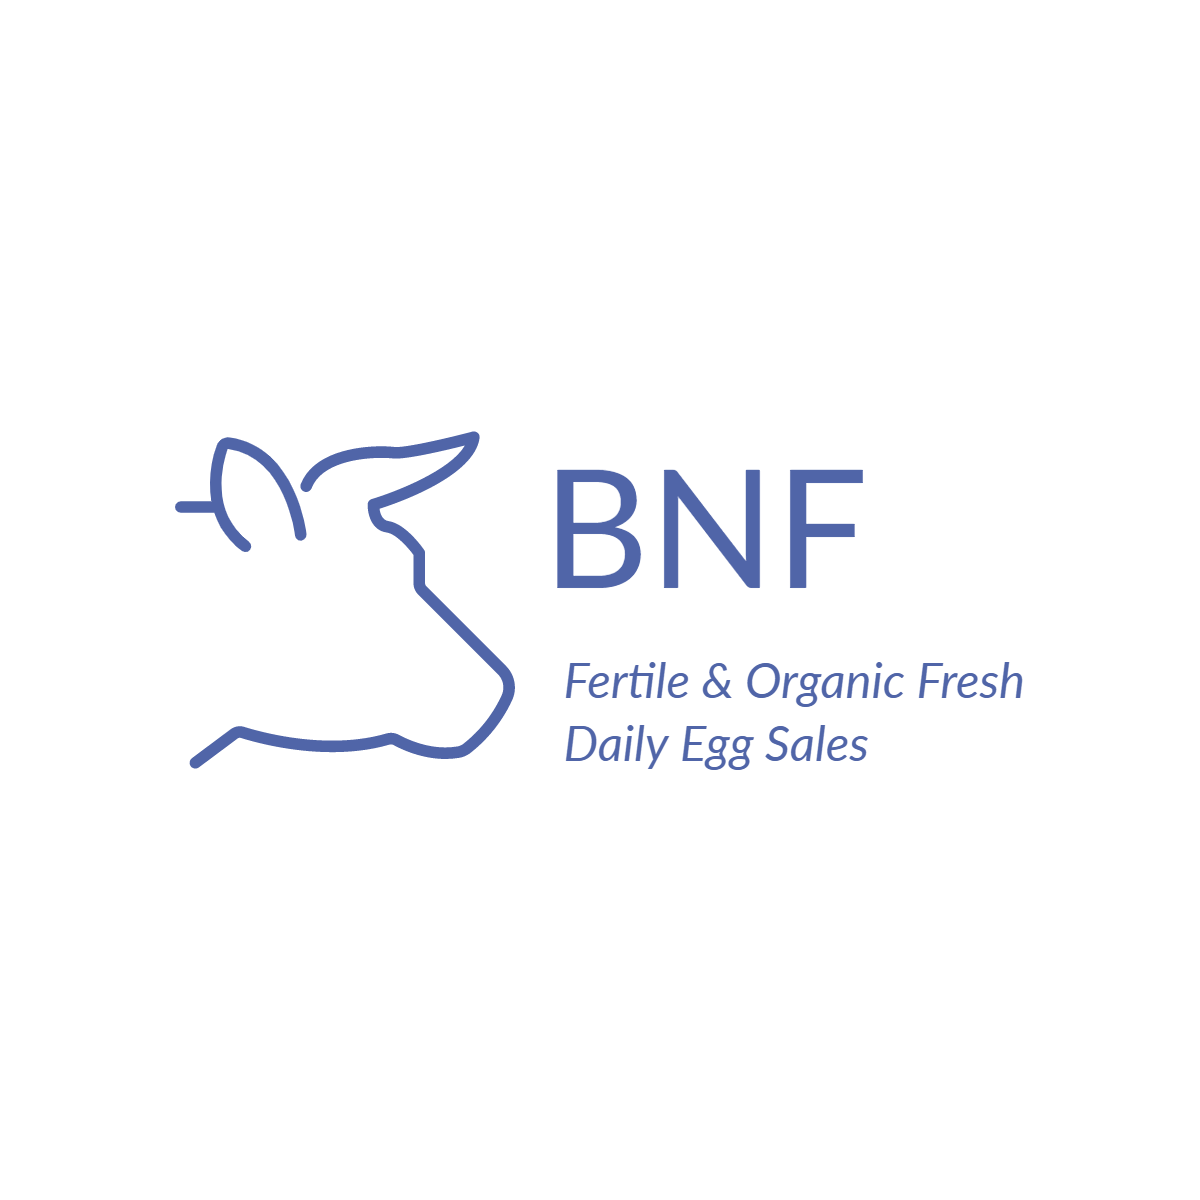 BNF letter farm logo cover image.